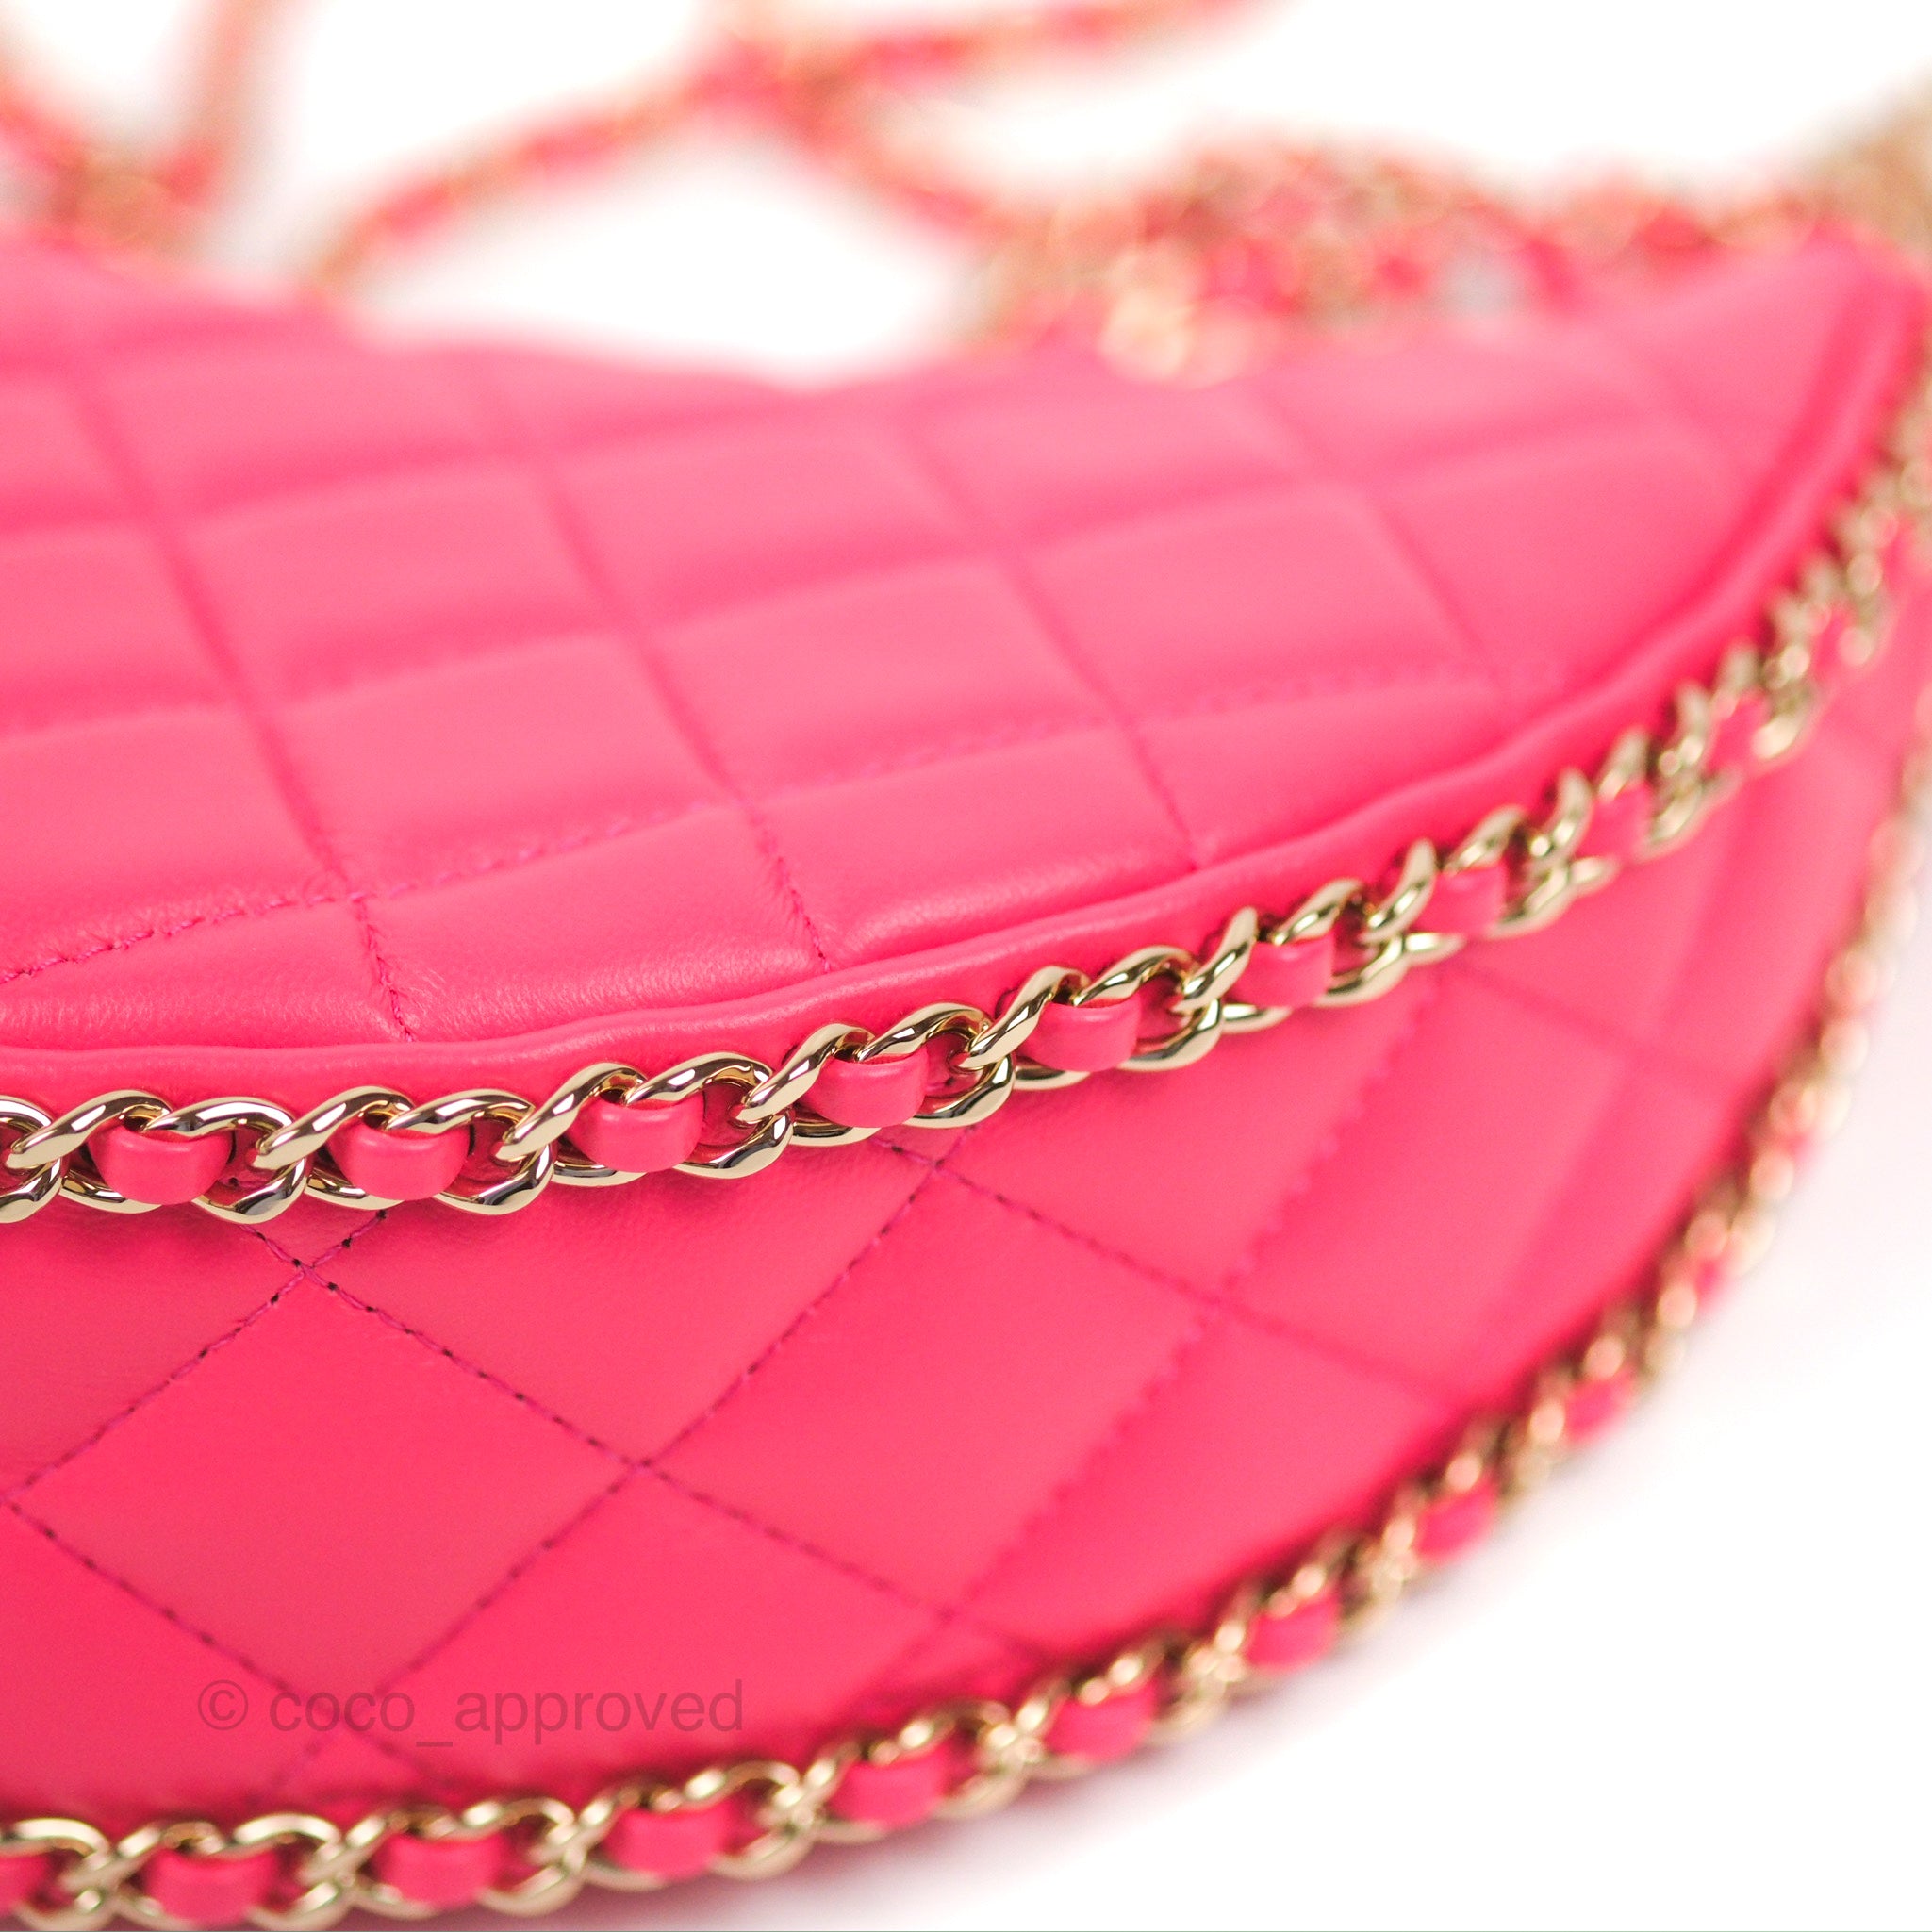 Chanel Heart Bag Large, Pink Lambskin Leather, Gold Hardware, Like